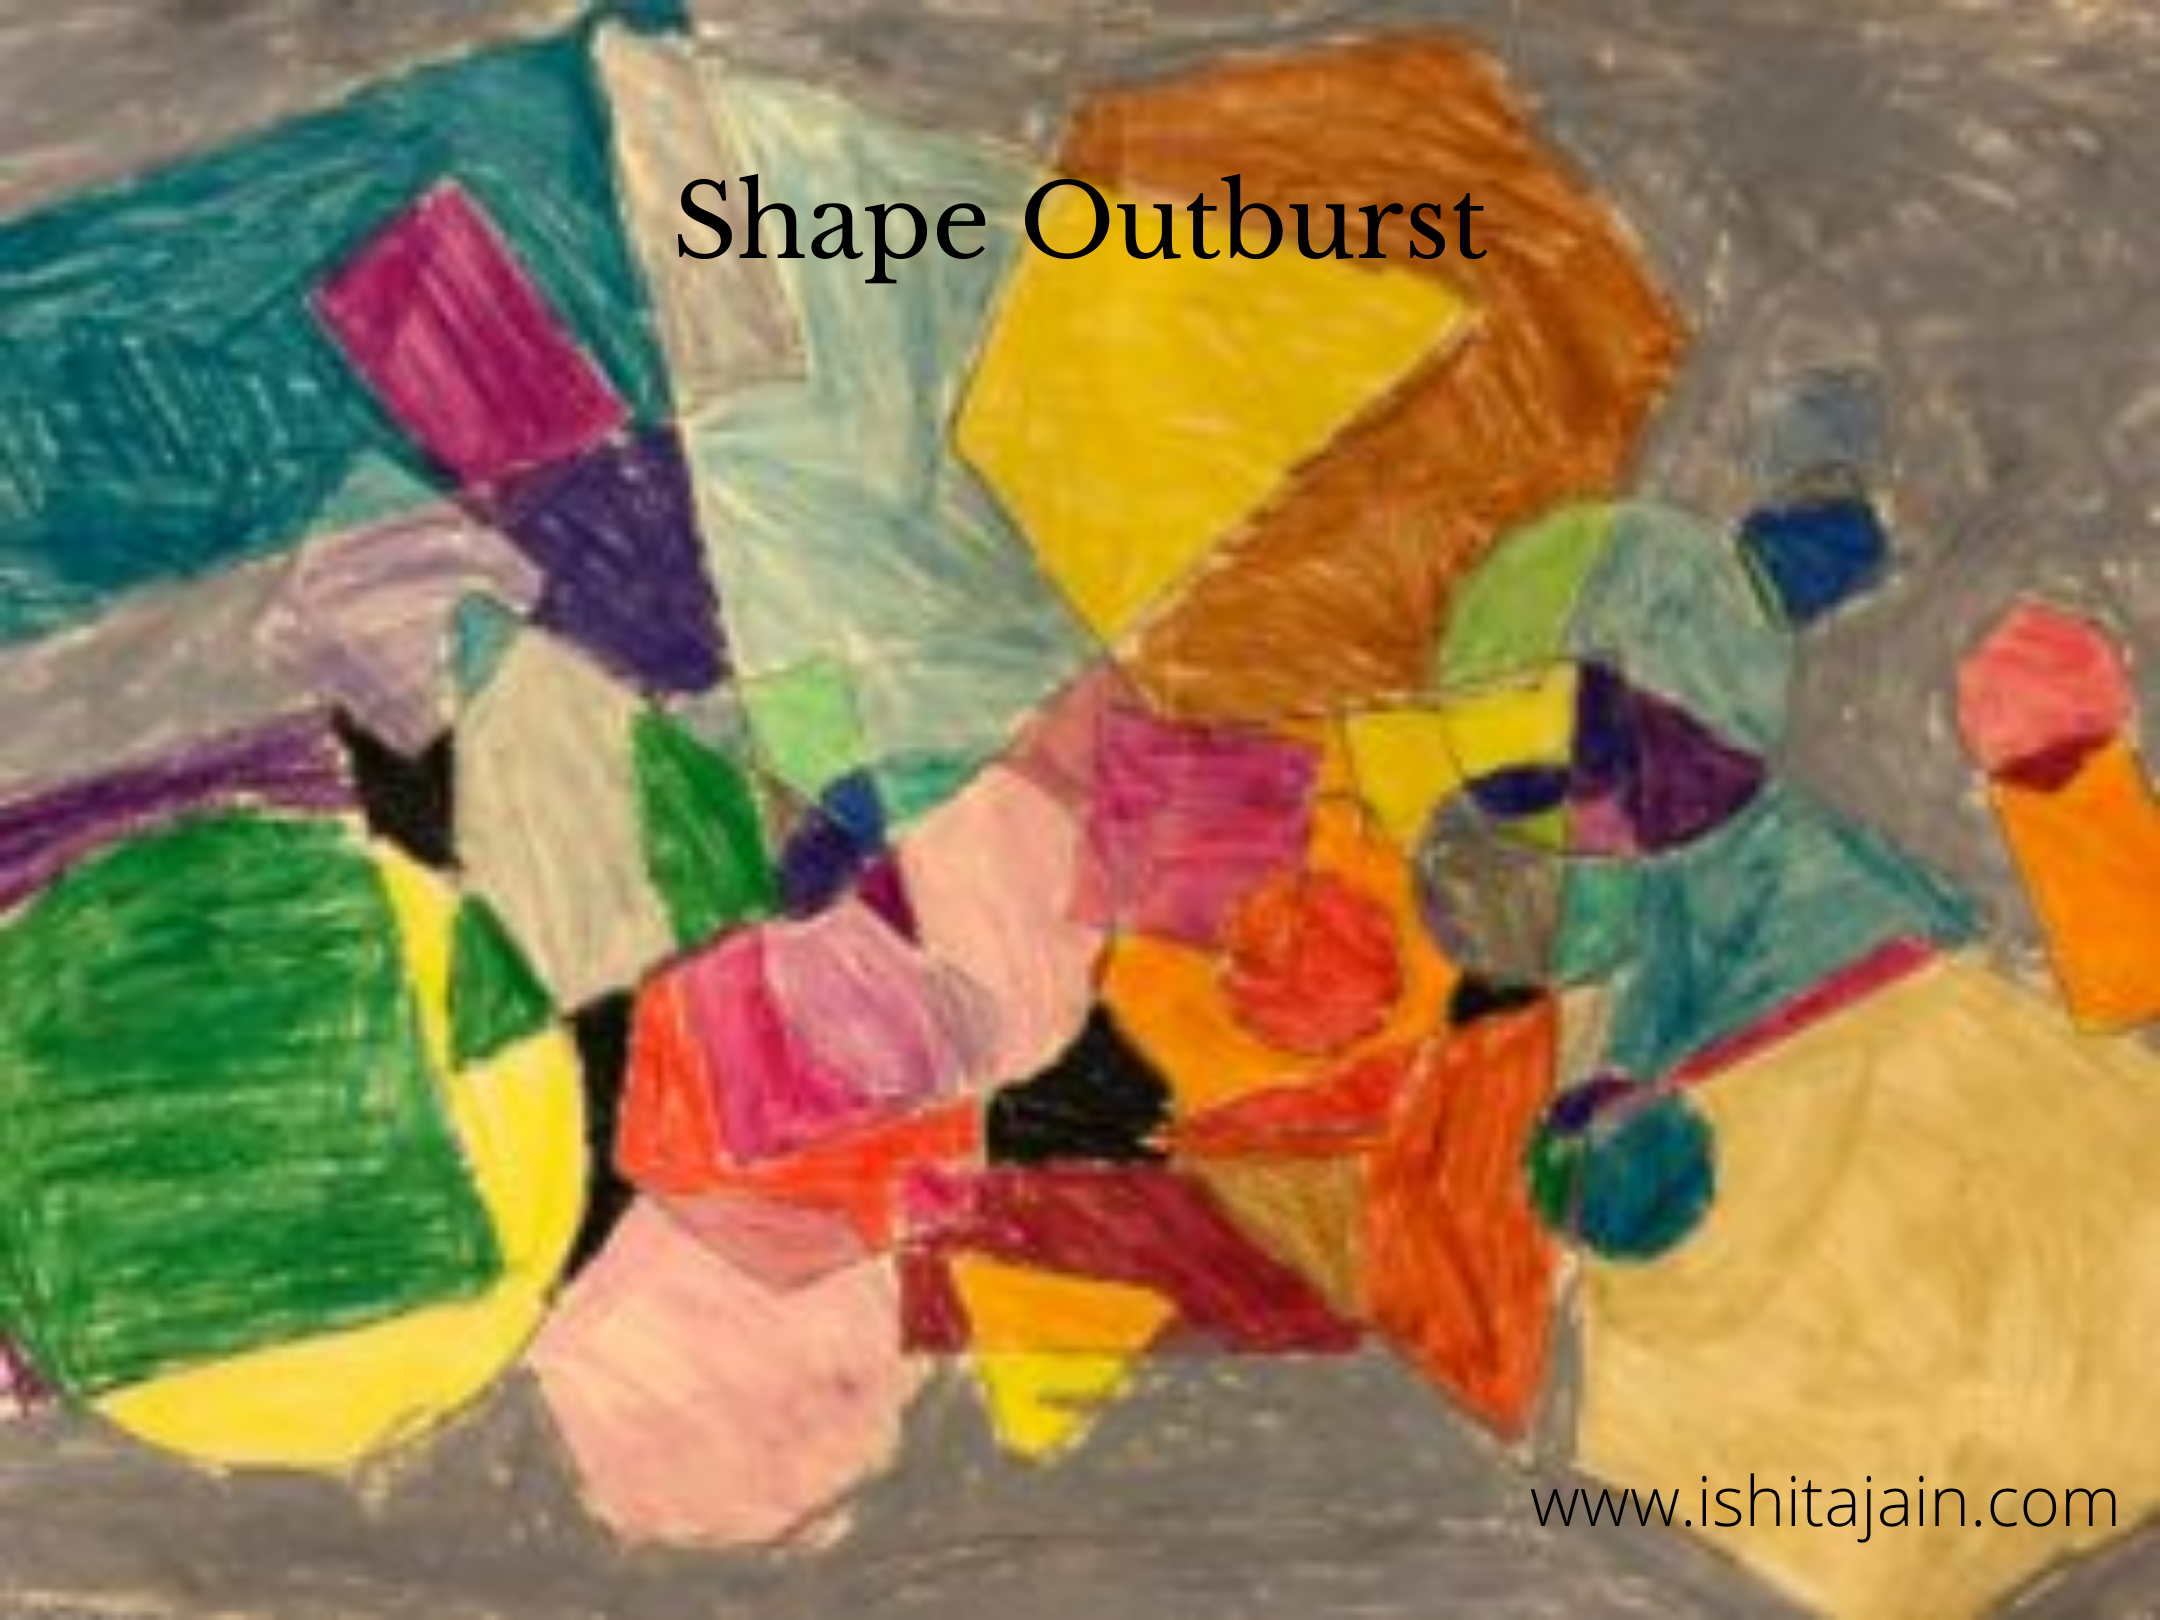 Shape Outburst